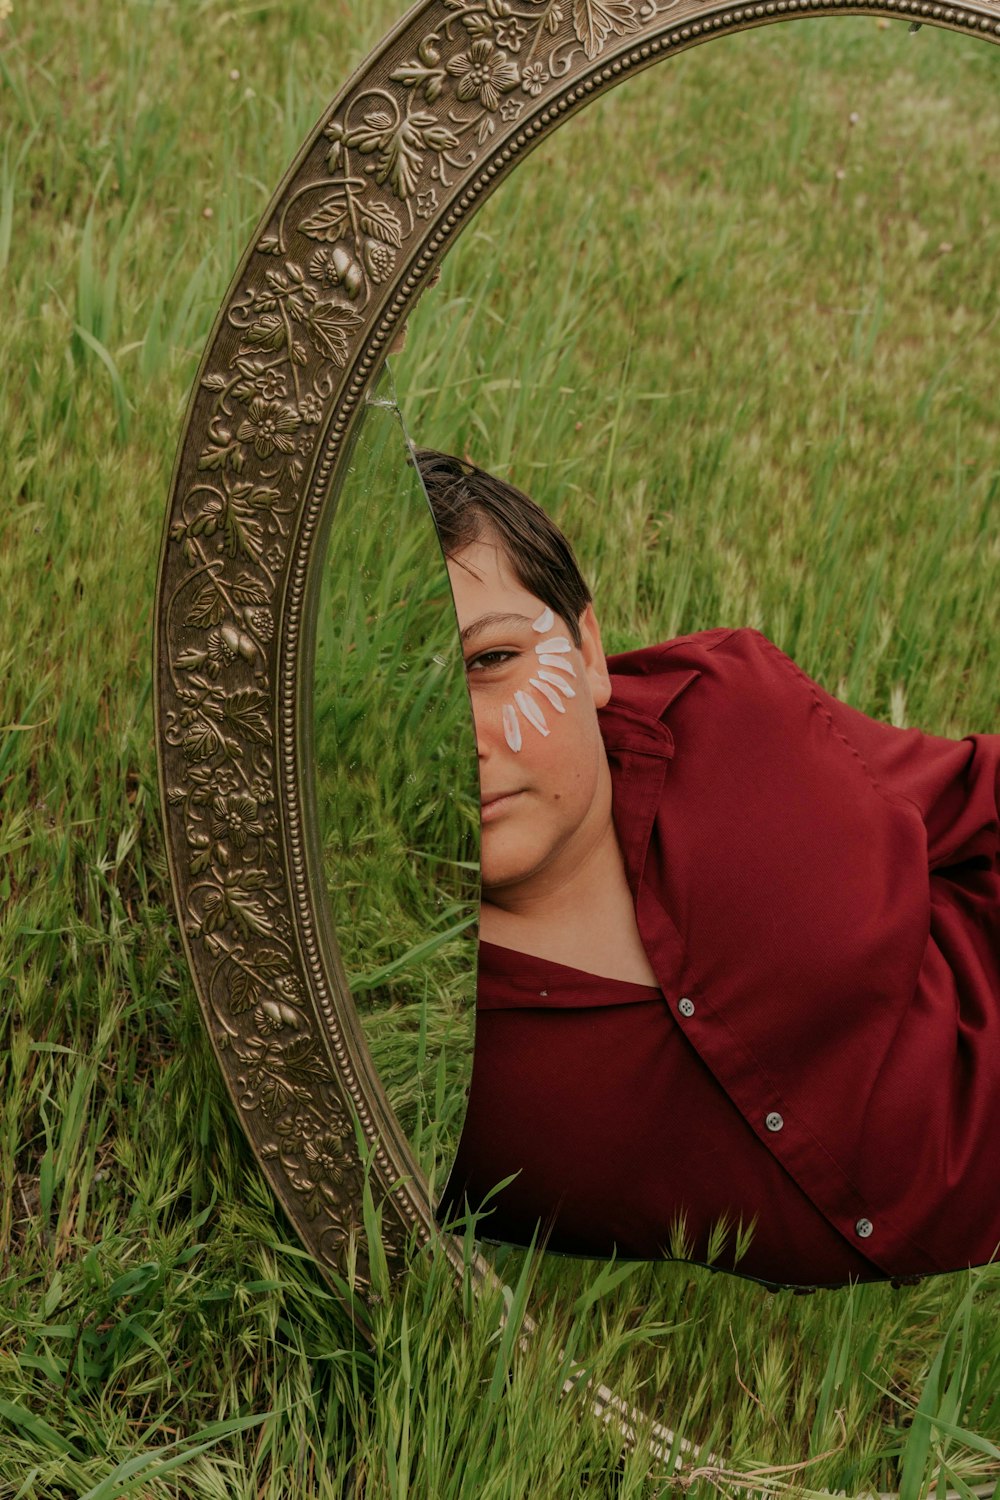 Femme en blazer rouge allongée sur le champ d’herbe verte